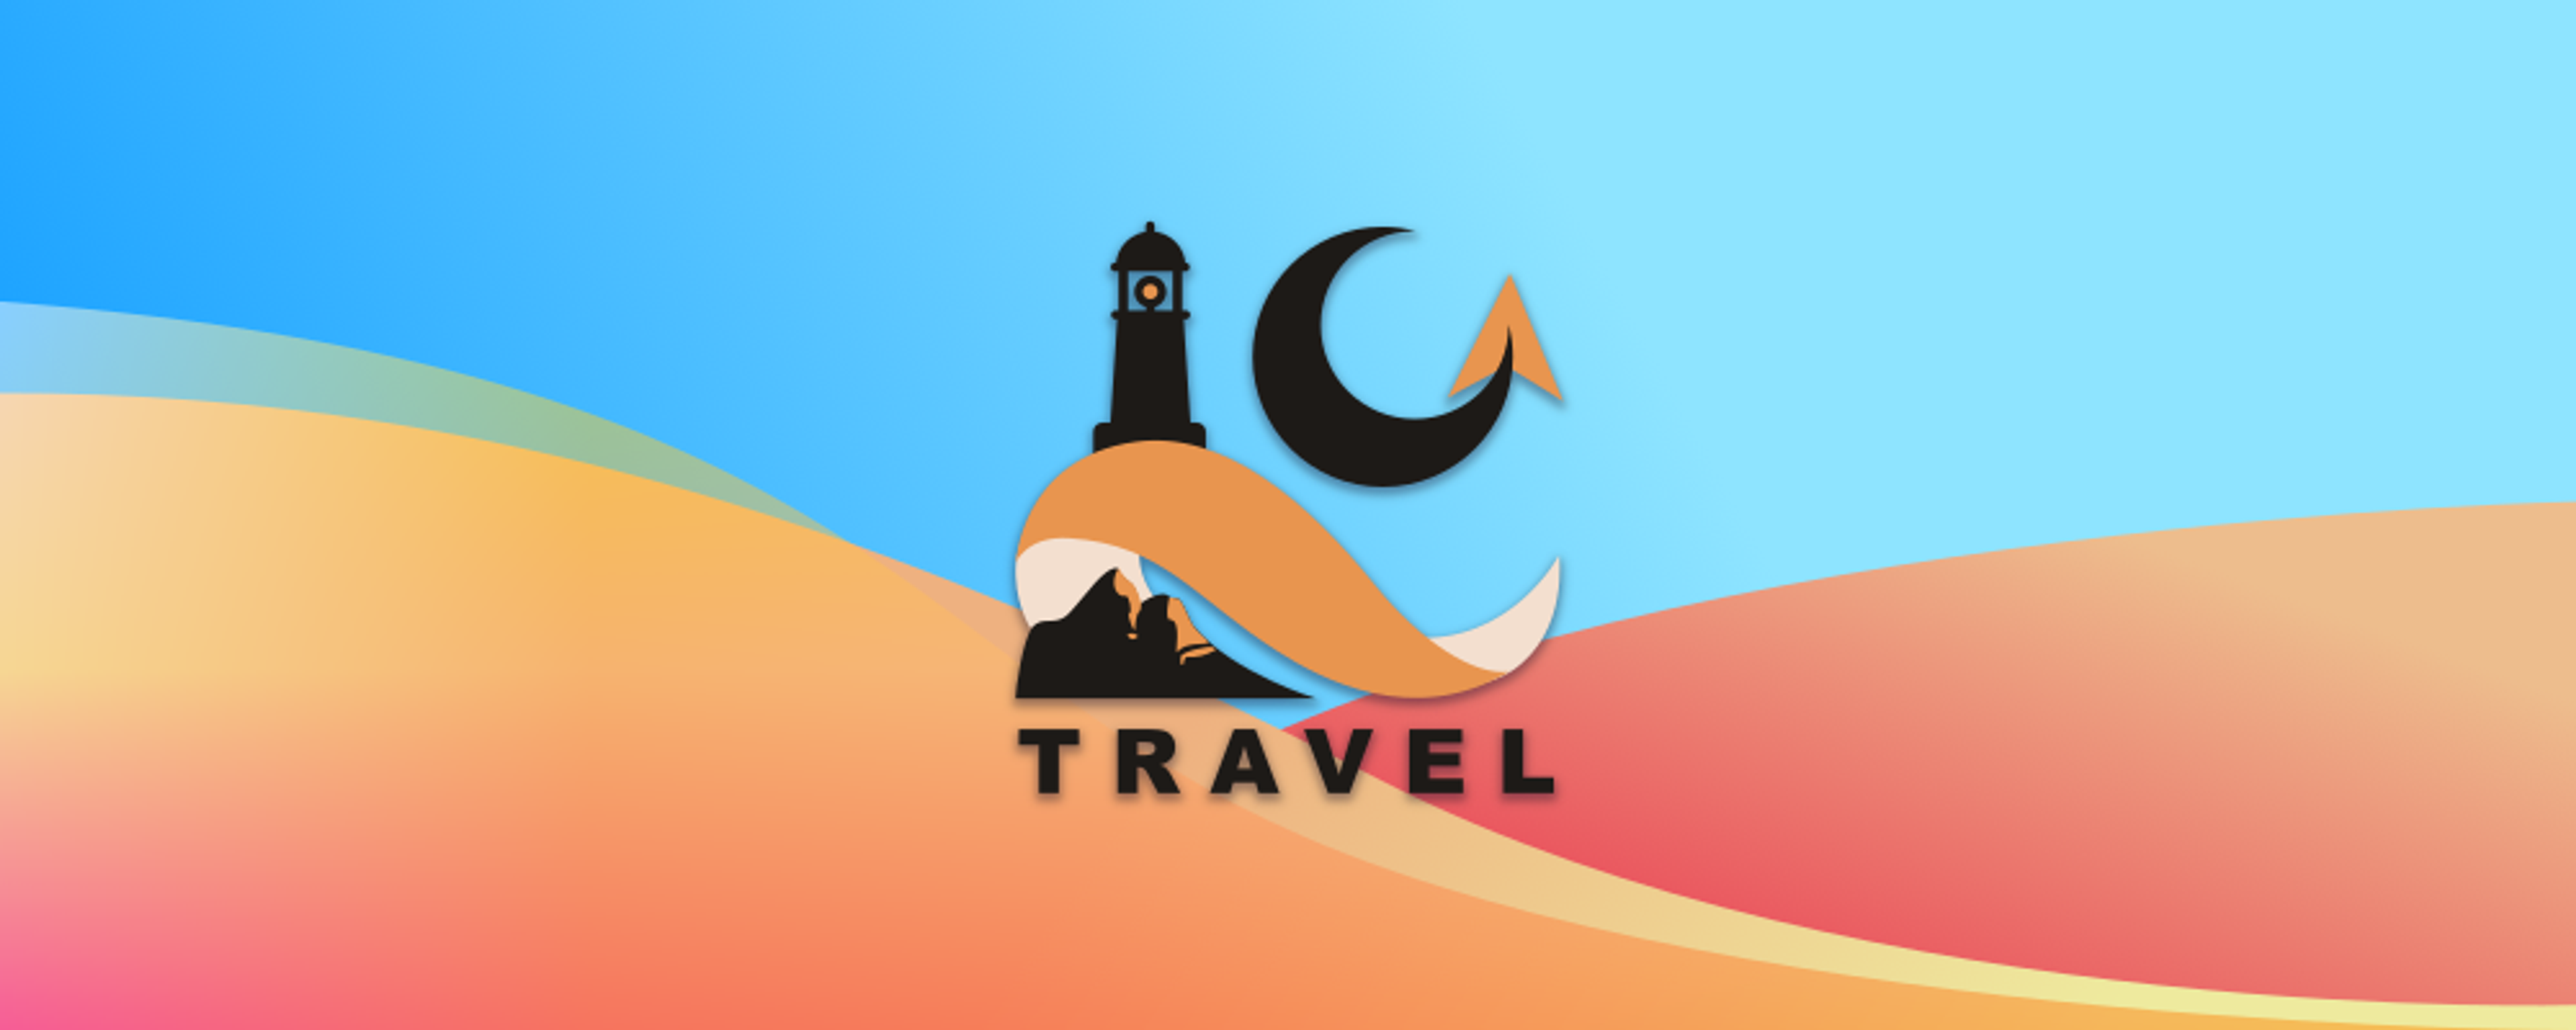 IC Travel